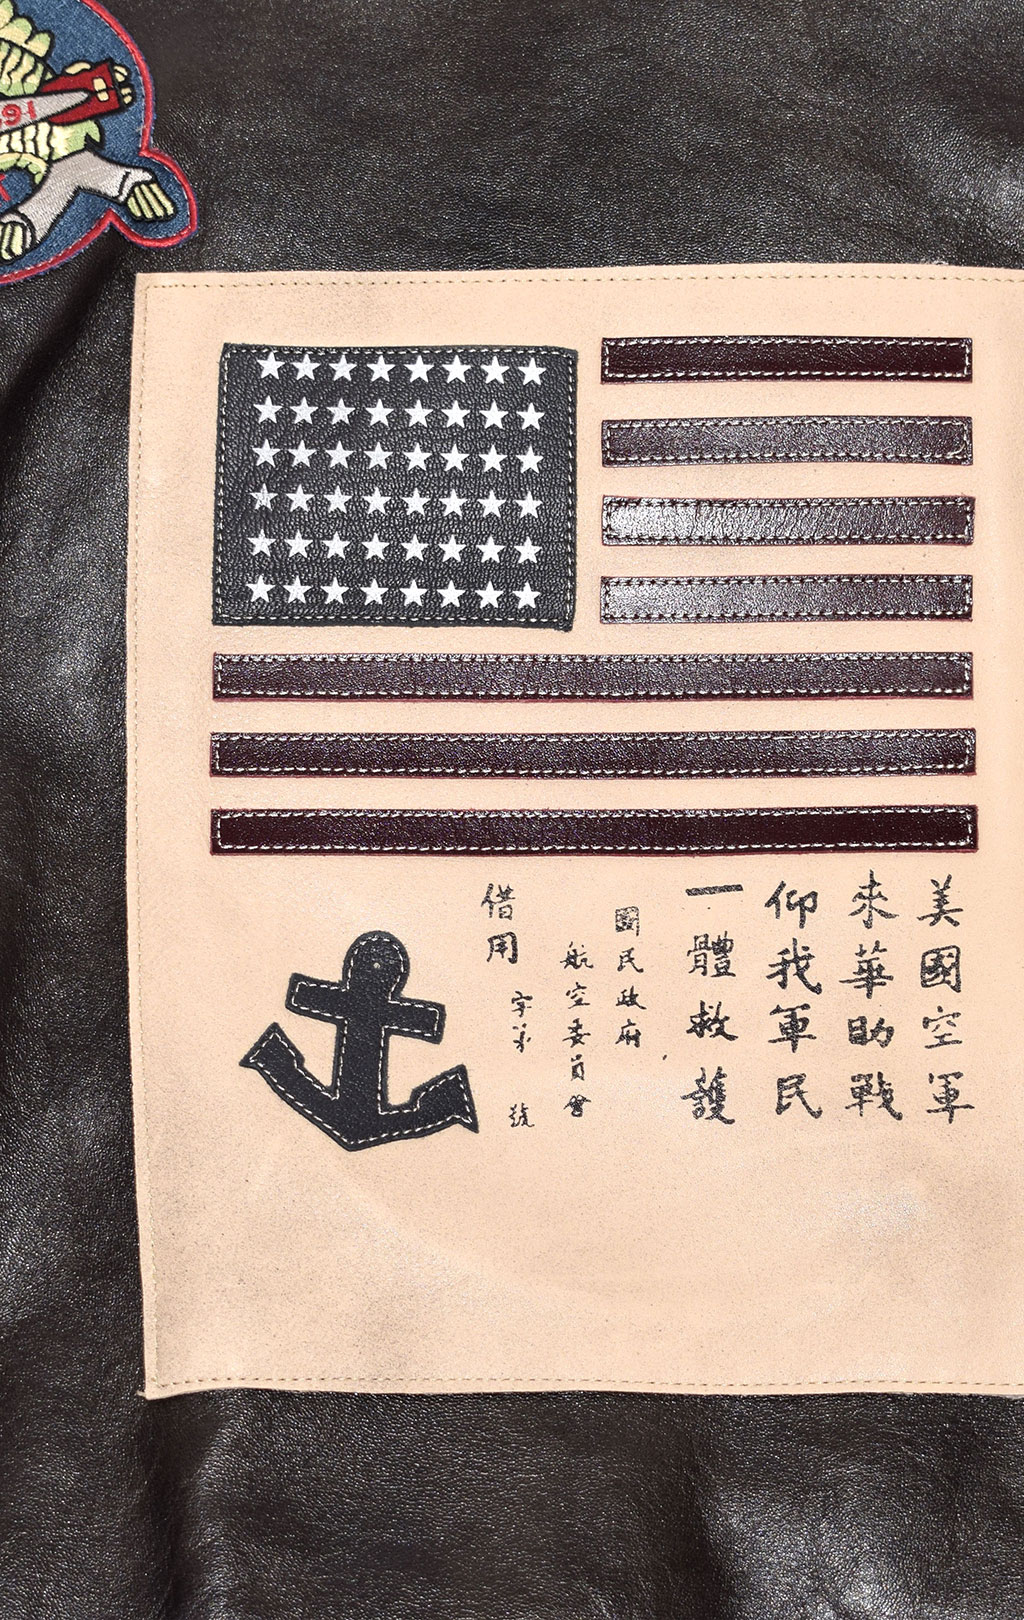 Куртка летная COCKPIT Top Gun Navy G-1 кожа brown (Z201036) 